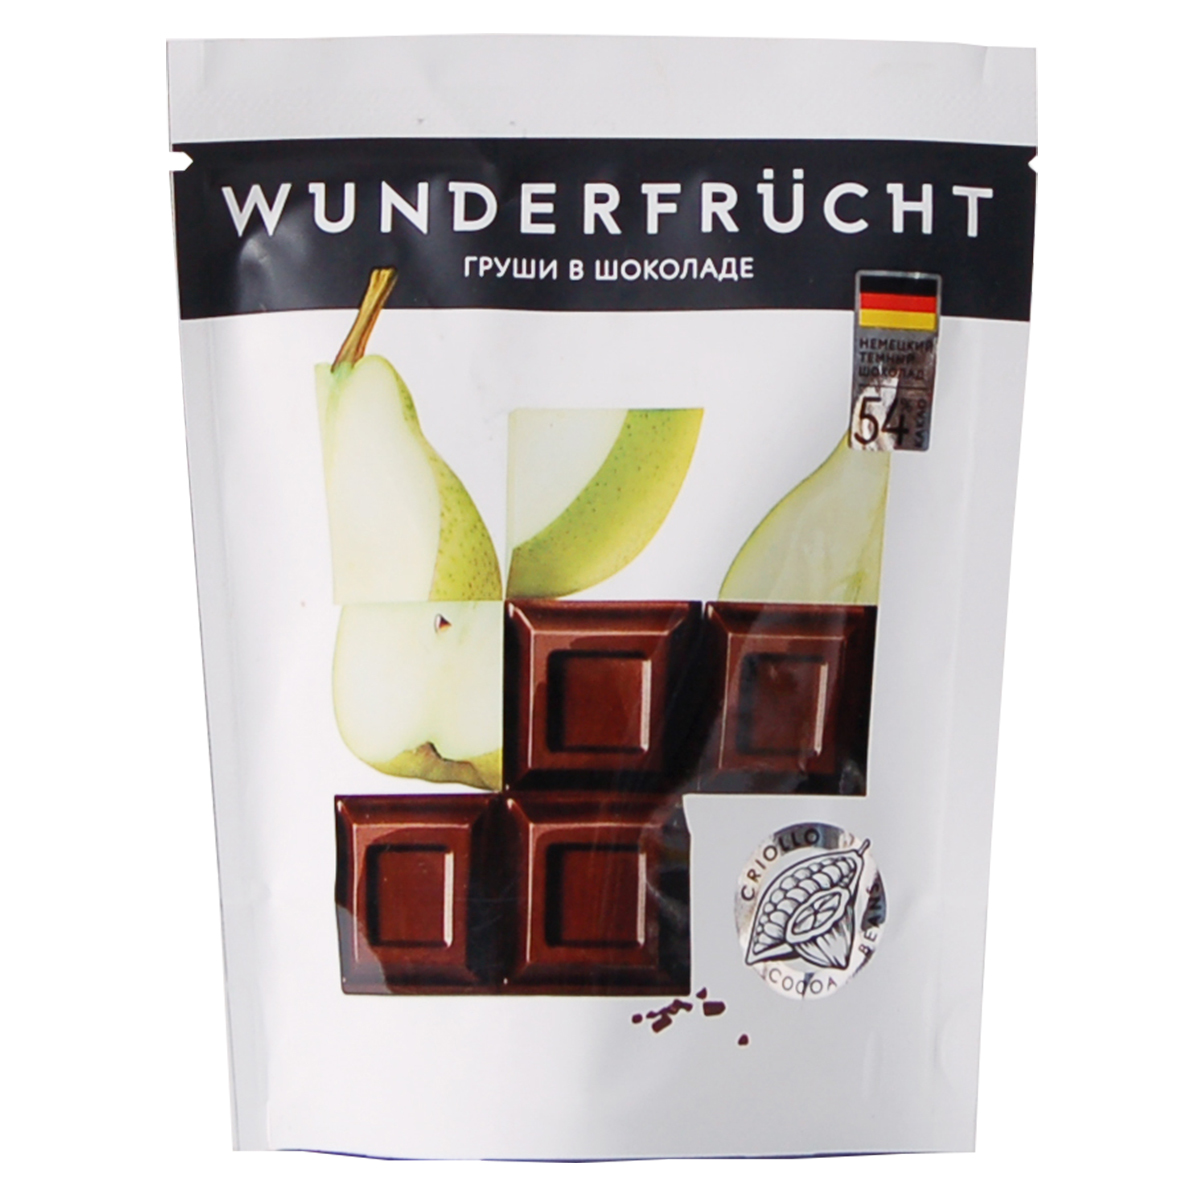 WunderFrucht Конфеты Груша в темном шоколаде 54%  75 г